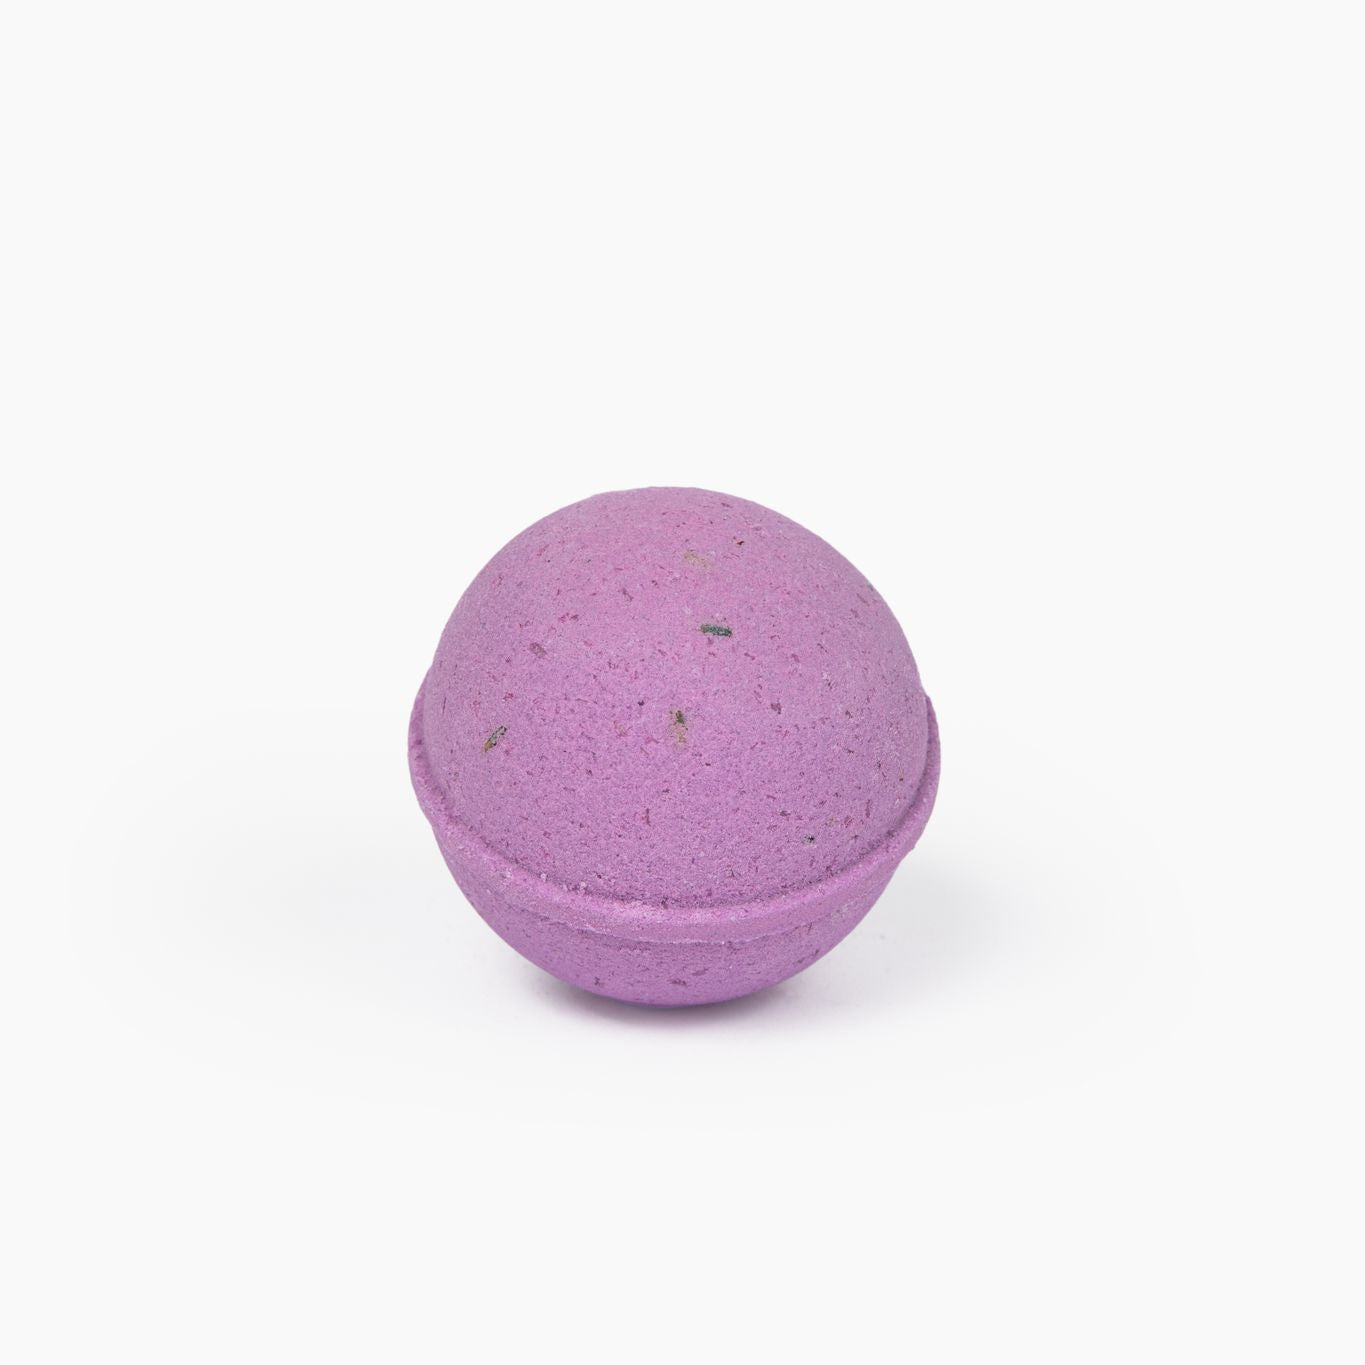 Soakshow CBD Bath Bomb in Sweet Lavender